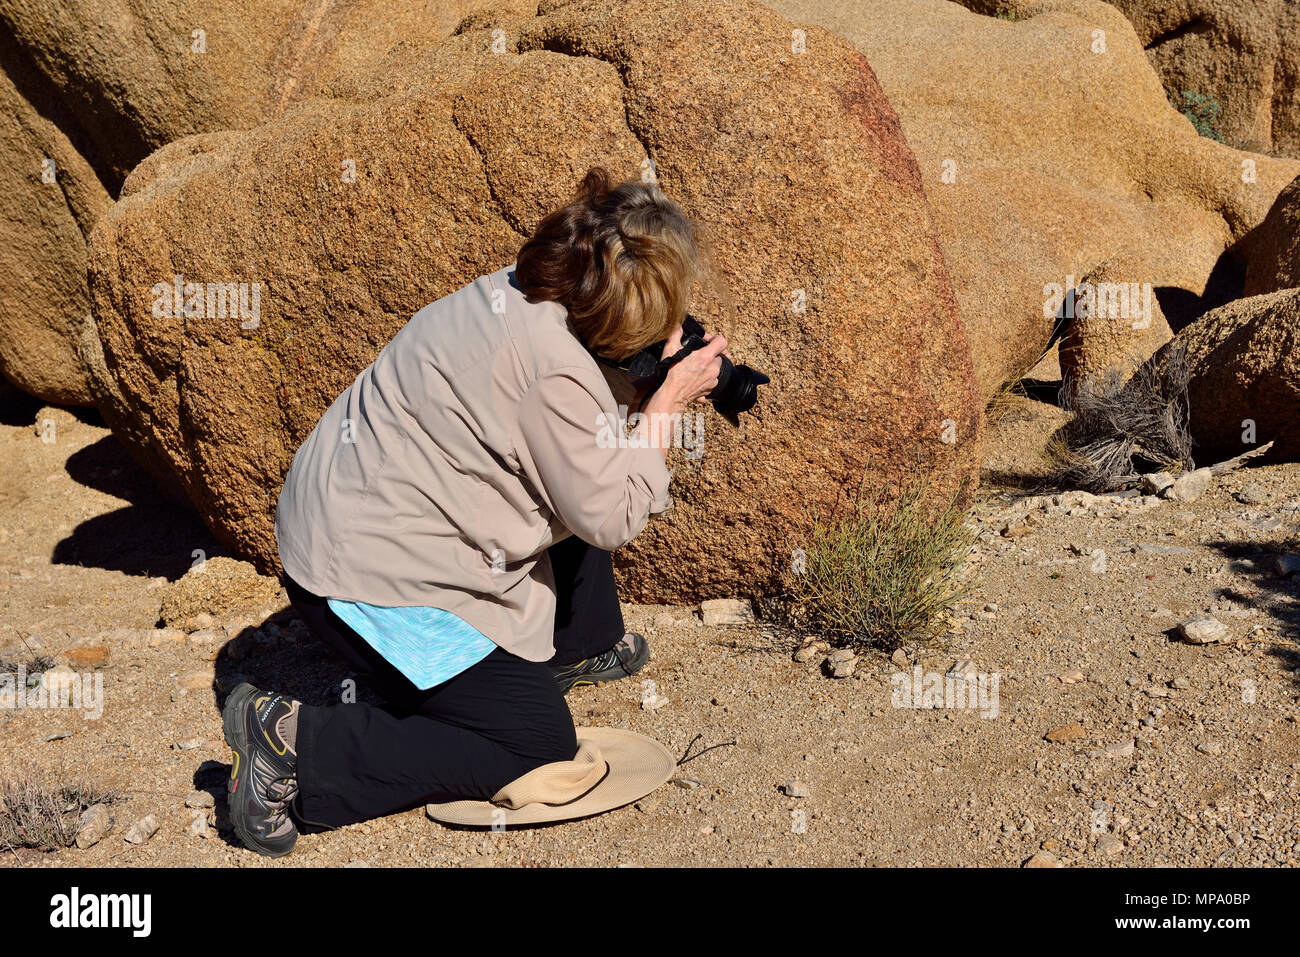 Lady photographing Desert rue, Thamnosma montana, Skull Rock area, Jumbo Rocks campground, Joshua Tree National Park, CA 180315 68341 Stock Photo